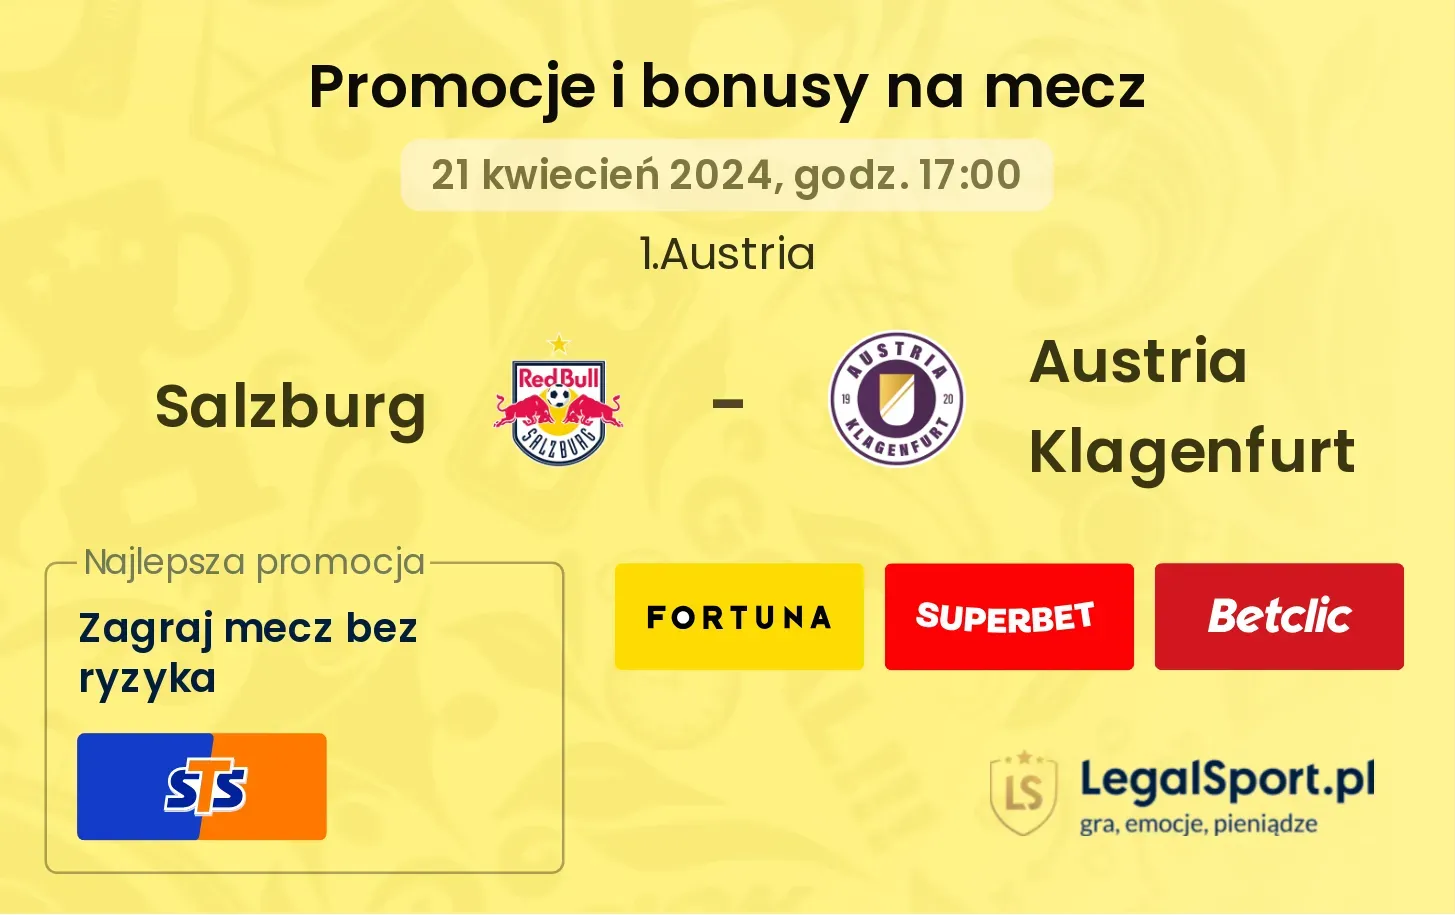 Salzburg - Austria Klagenfurt promocje bonusy na mecz